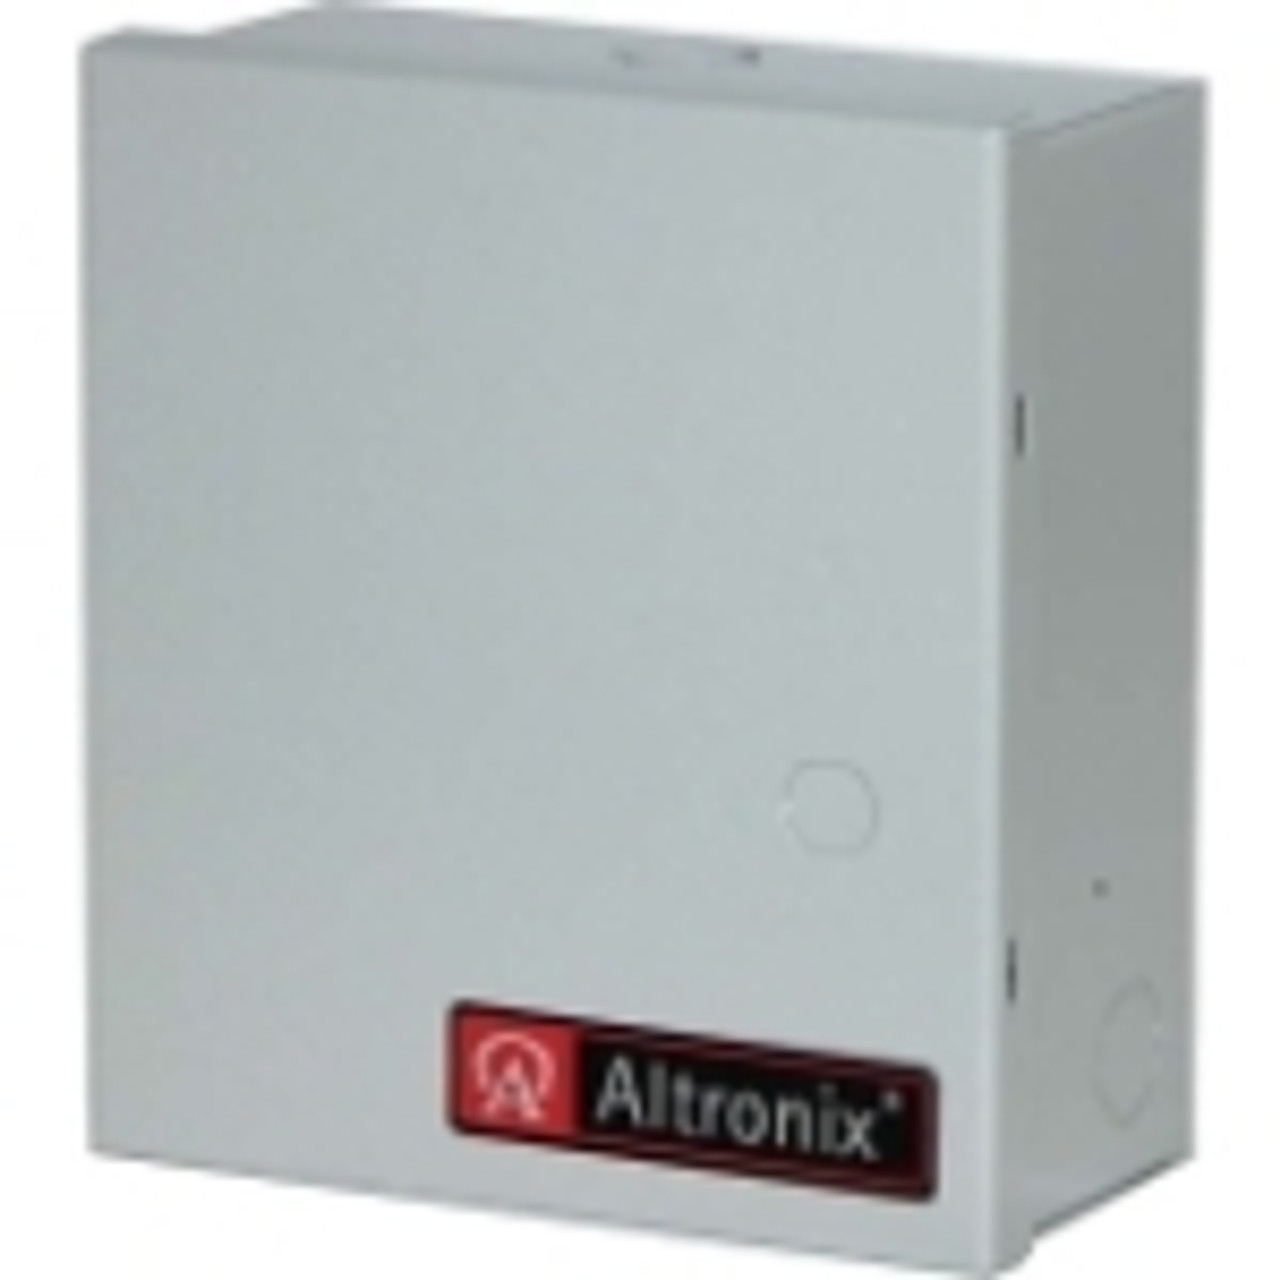 ALTV124 Altronix Proprietary Power Supply 12 V AC Input Voltage